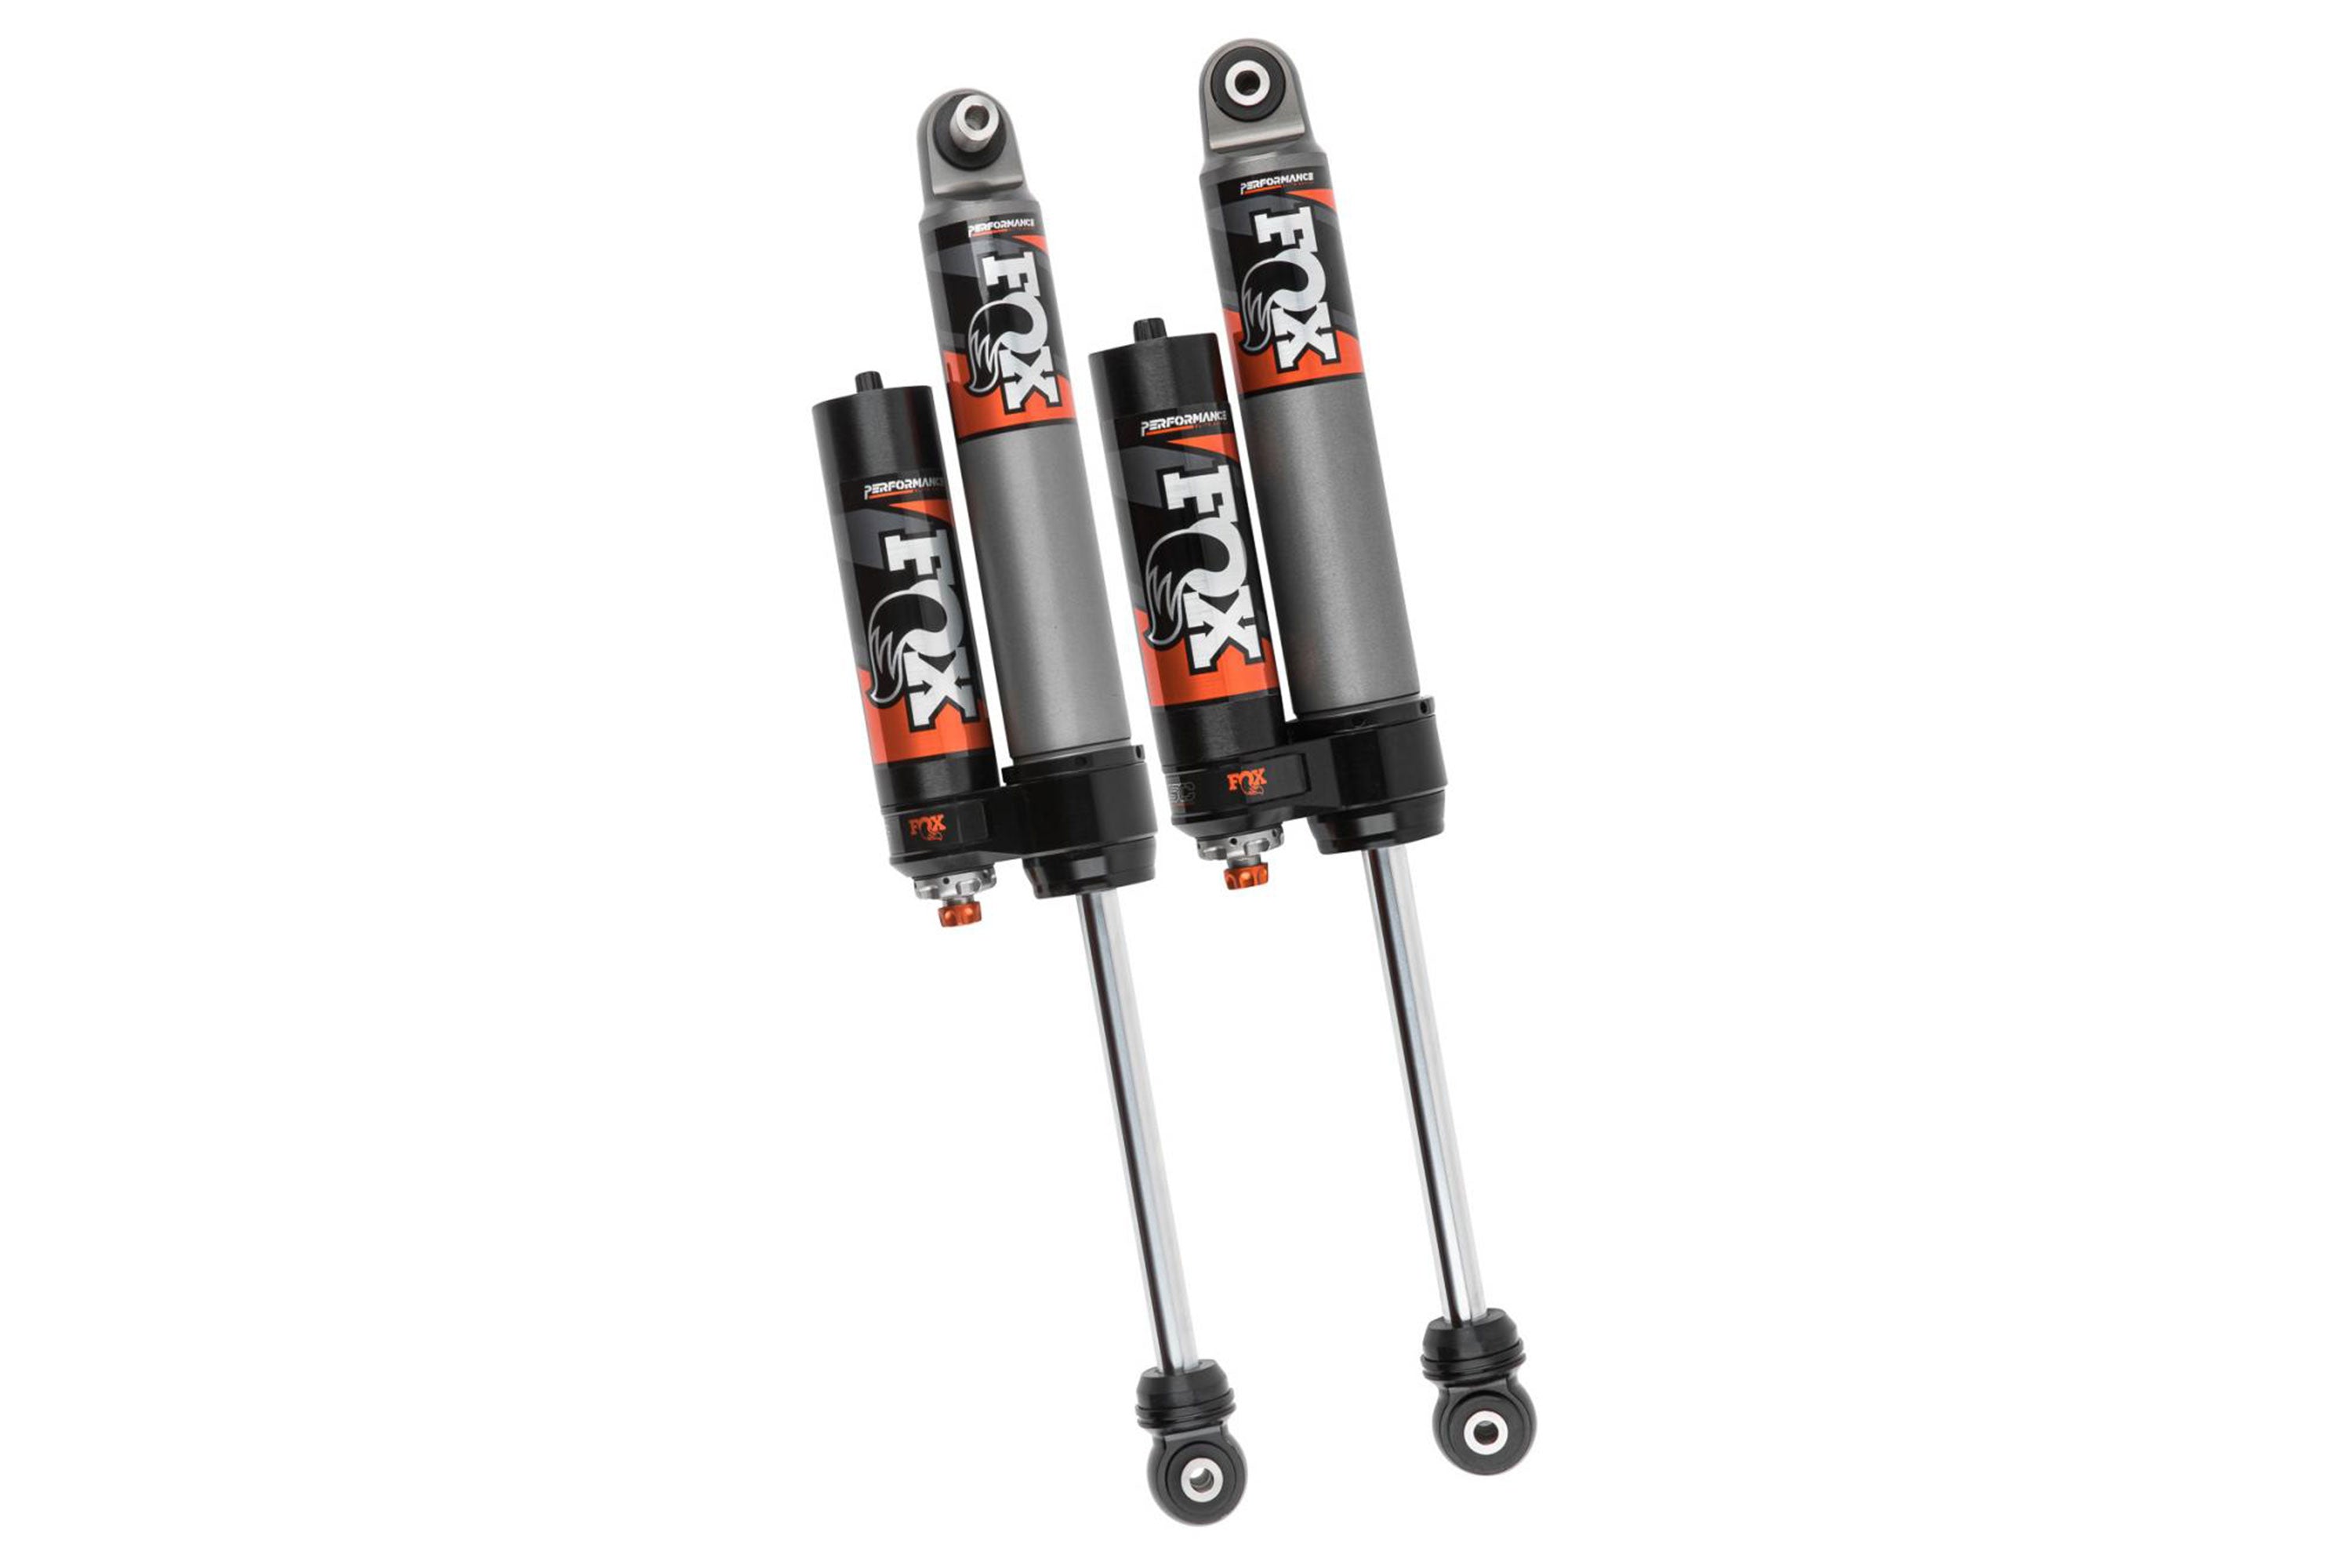 Rear nitro shock Fox Performance Elite 2.5 Reservoir adjustable